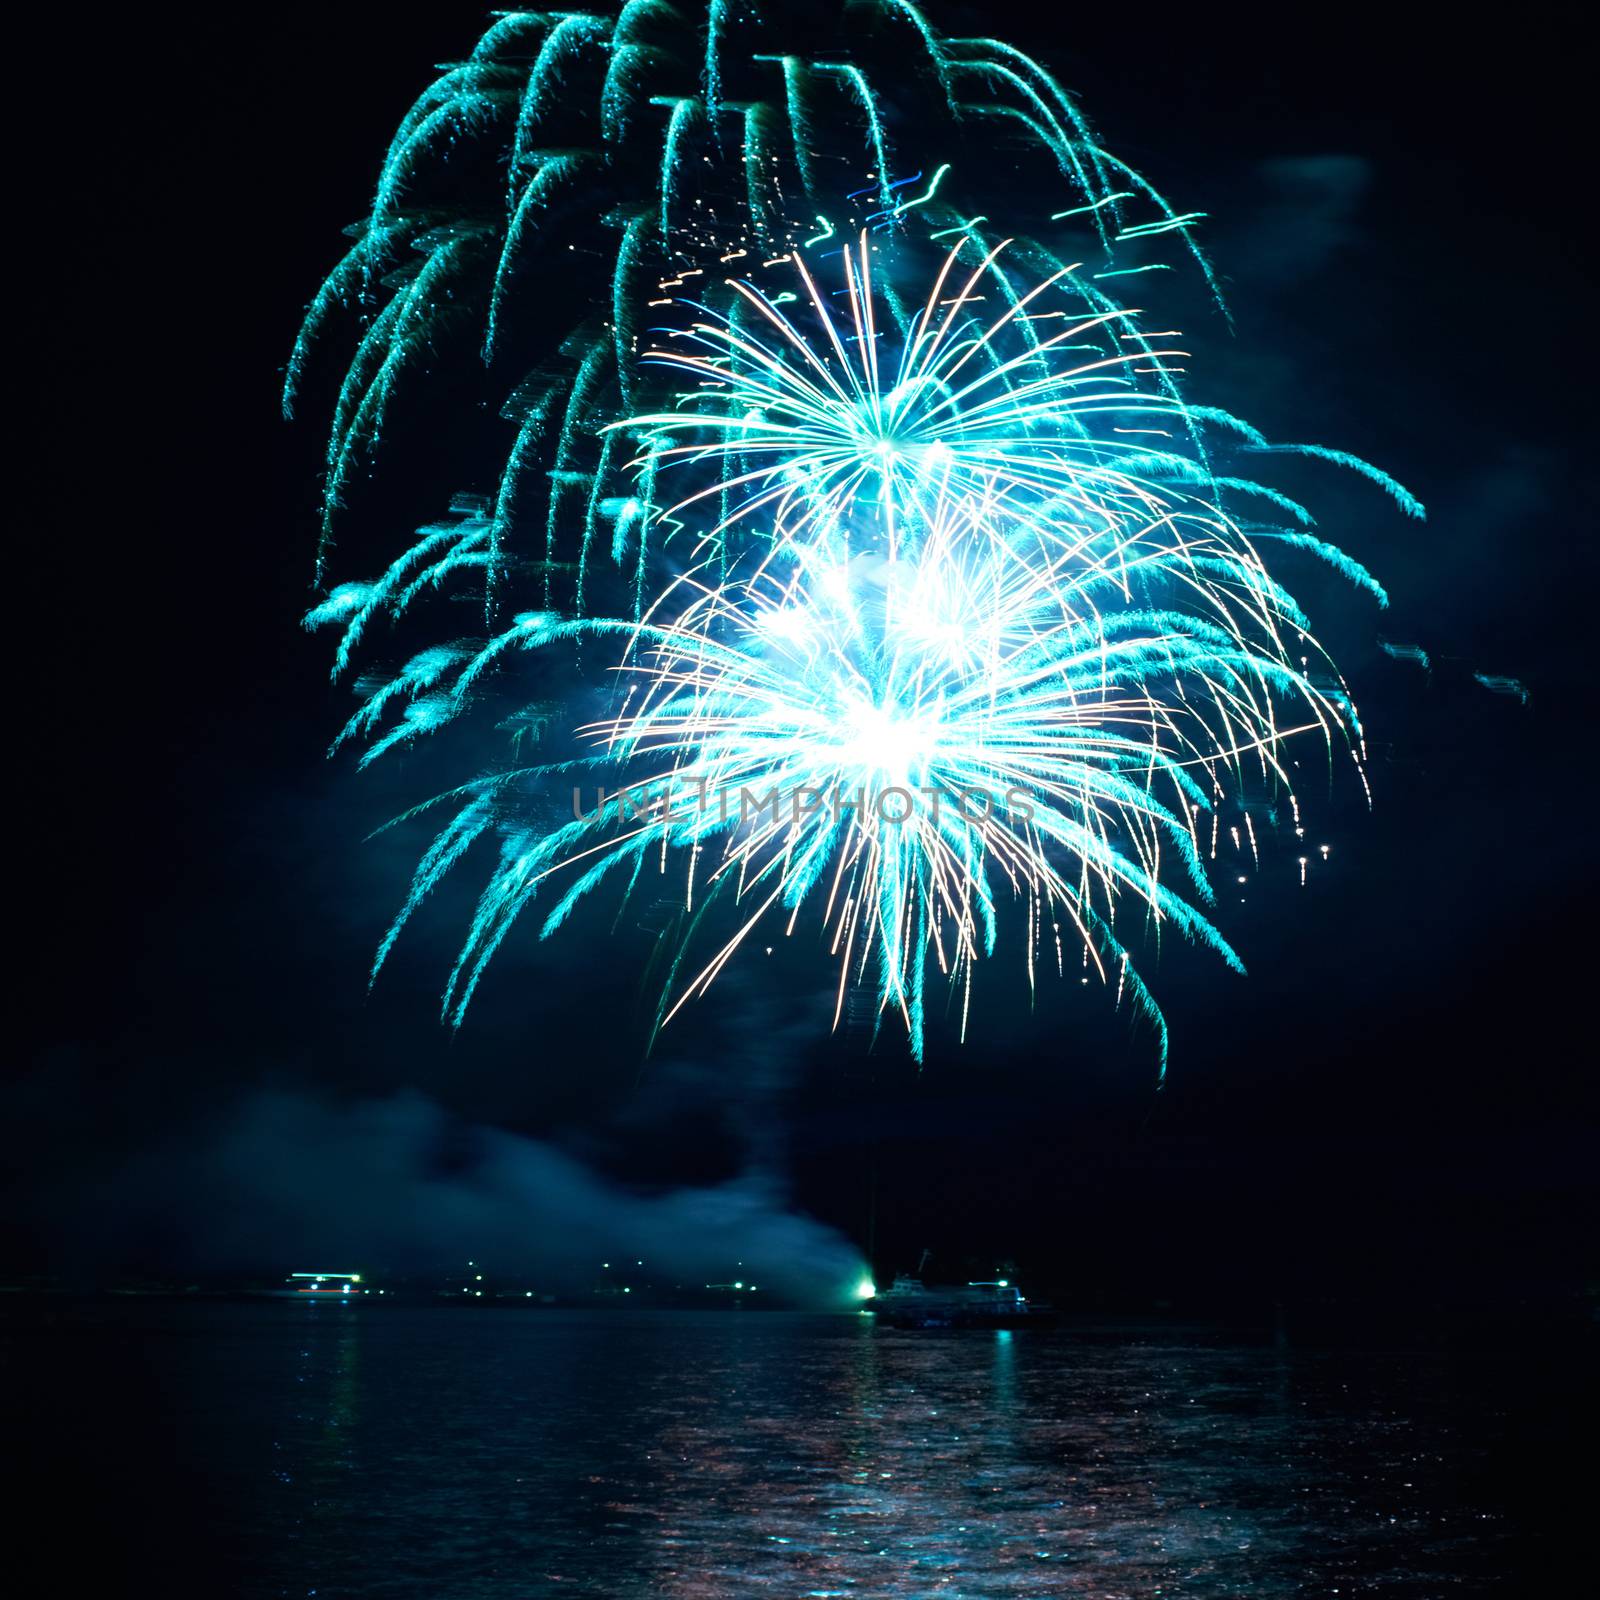 Blue fireworks by vapi